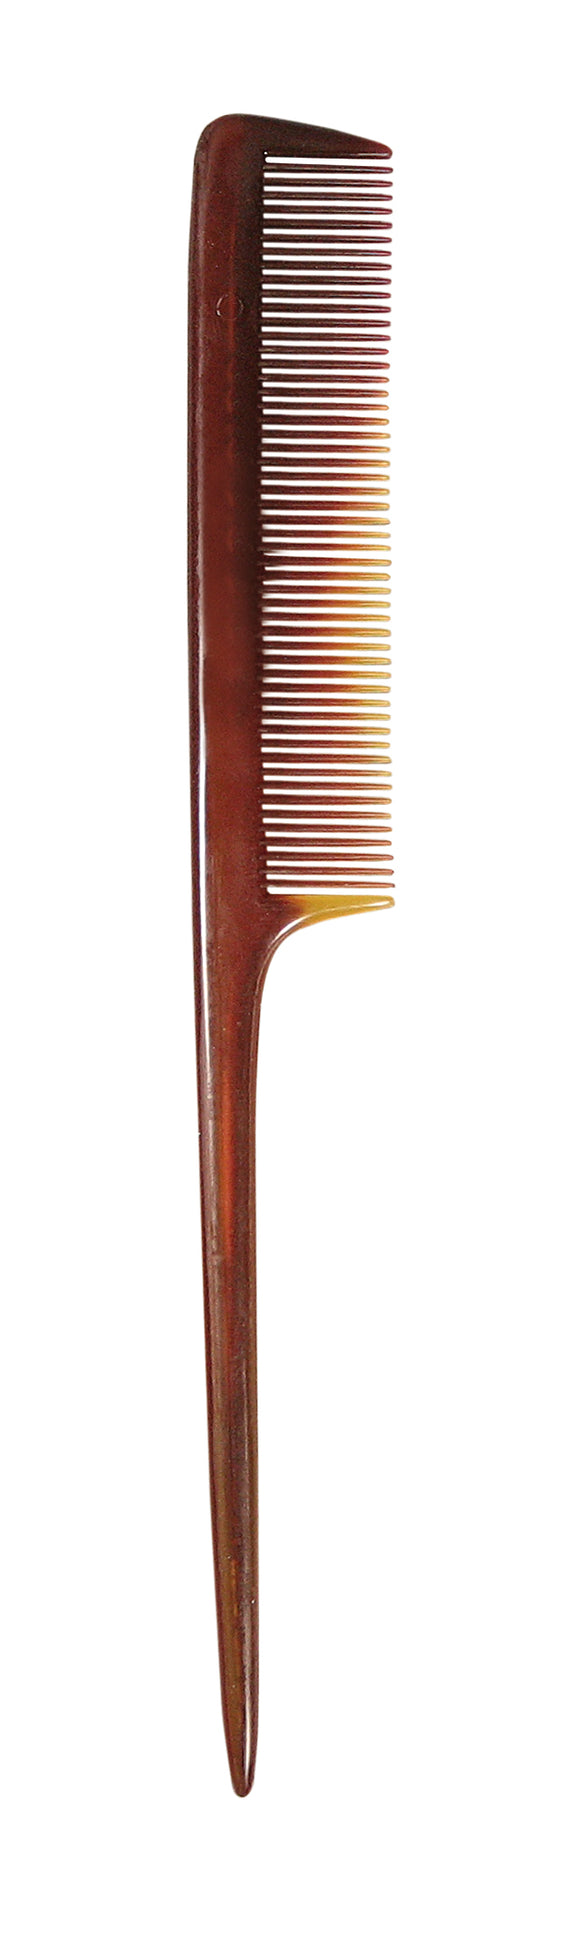 Titania Comb with Handle 20.5cm 1808/8